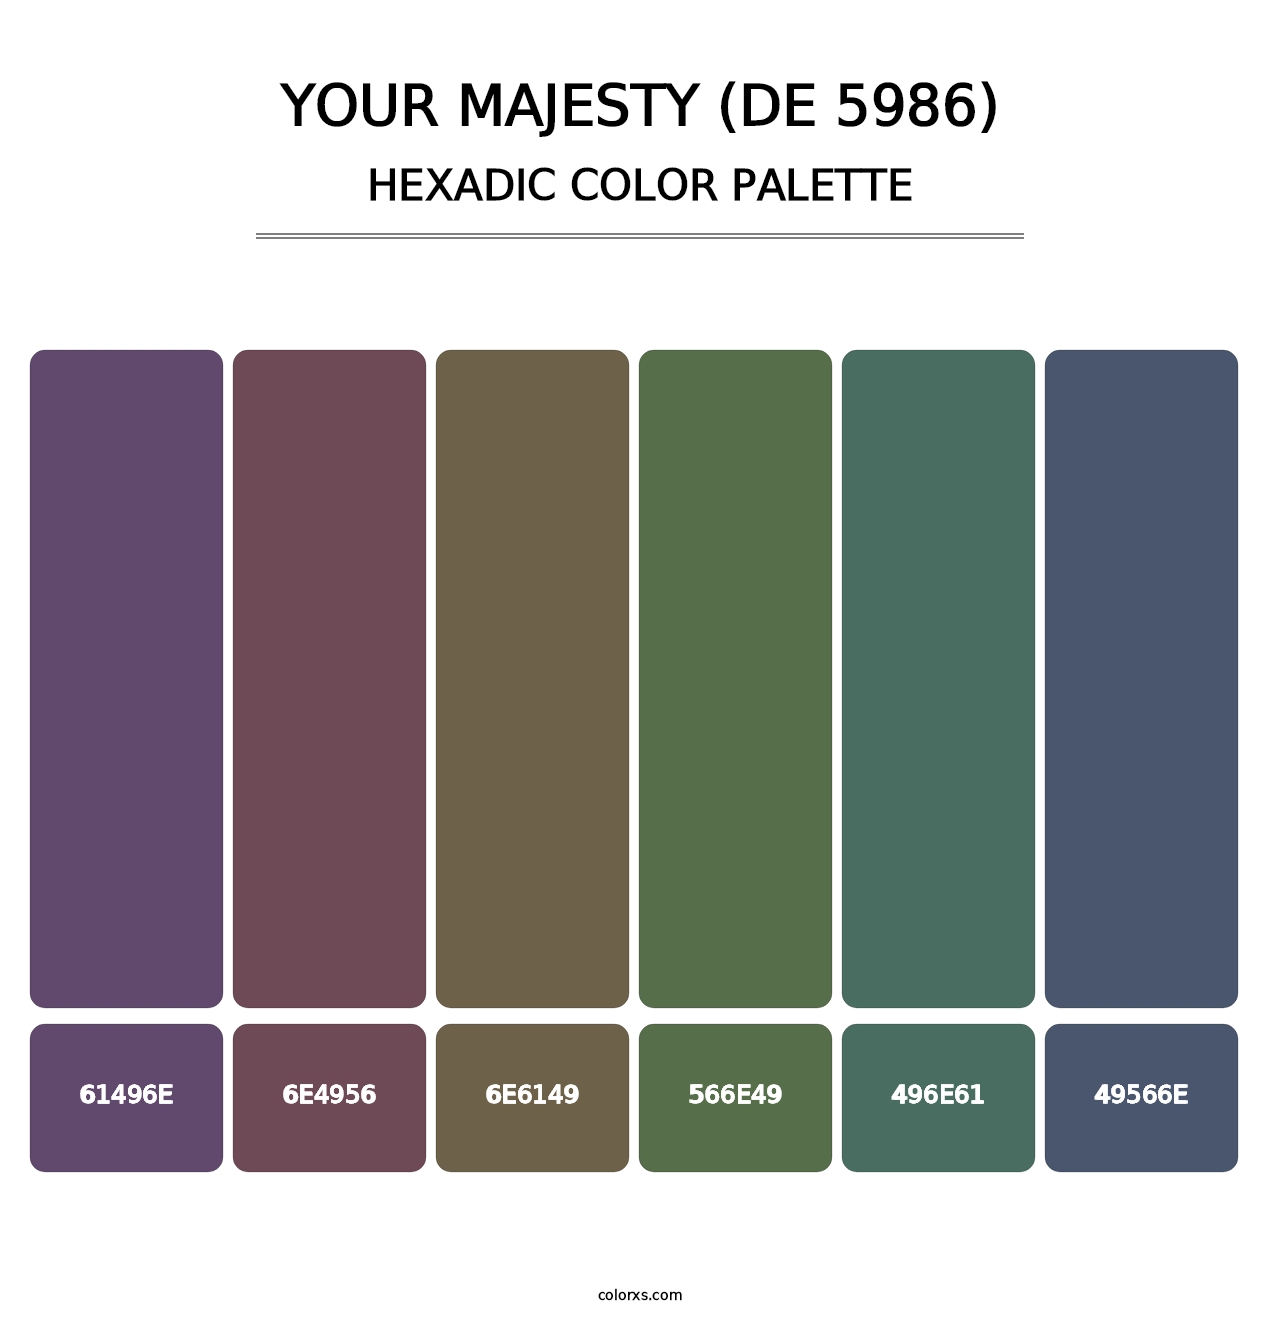 Your Majesty (DE 5986) - Hexadic Color Palette